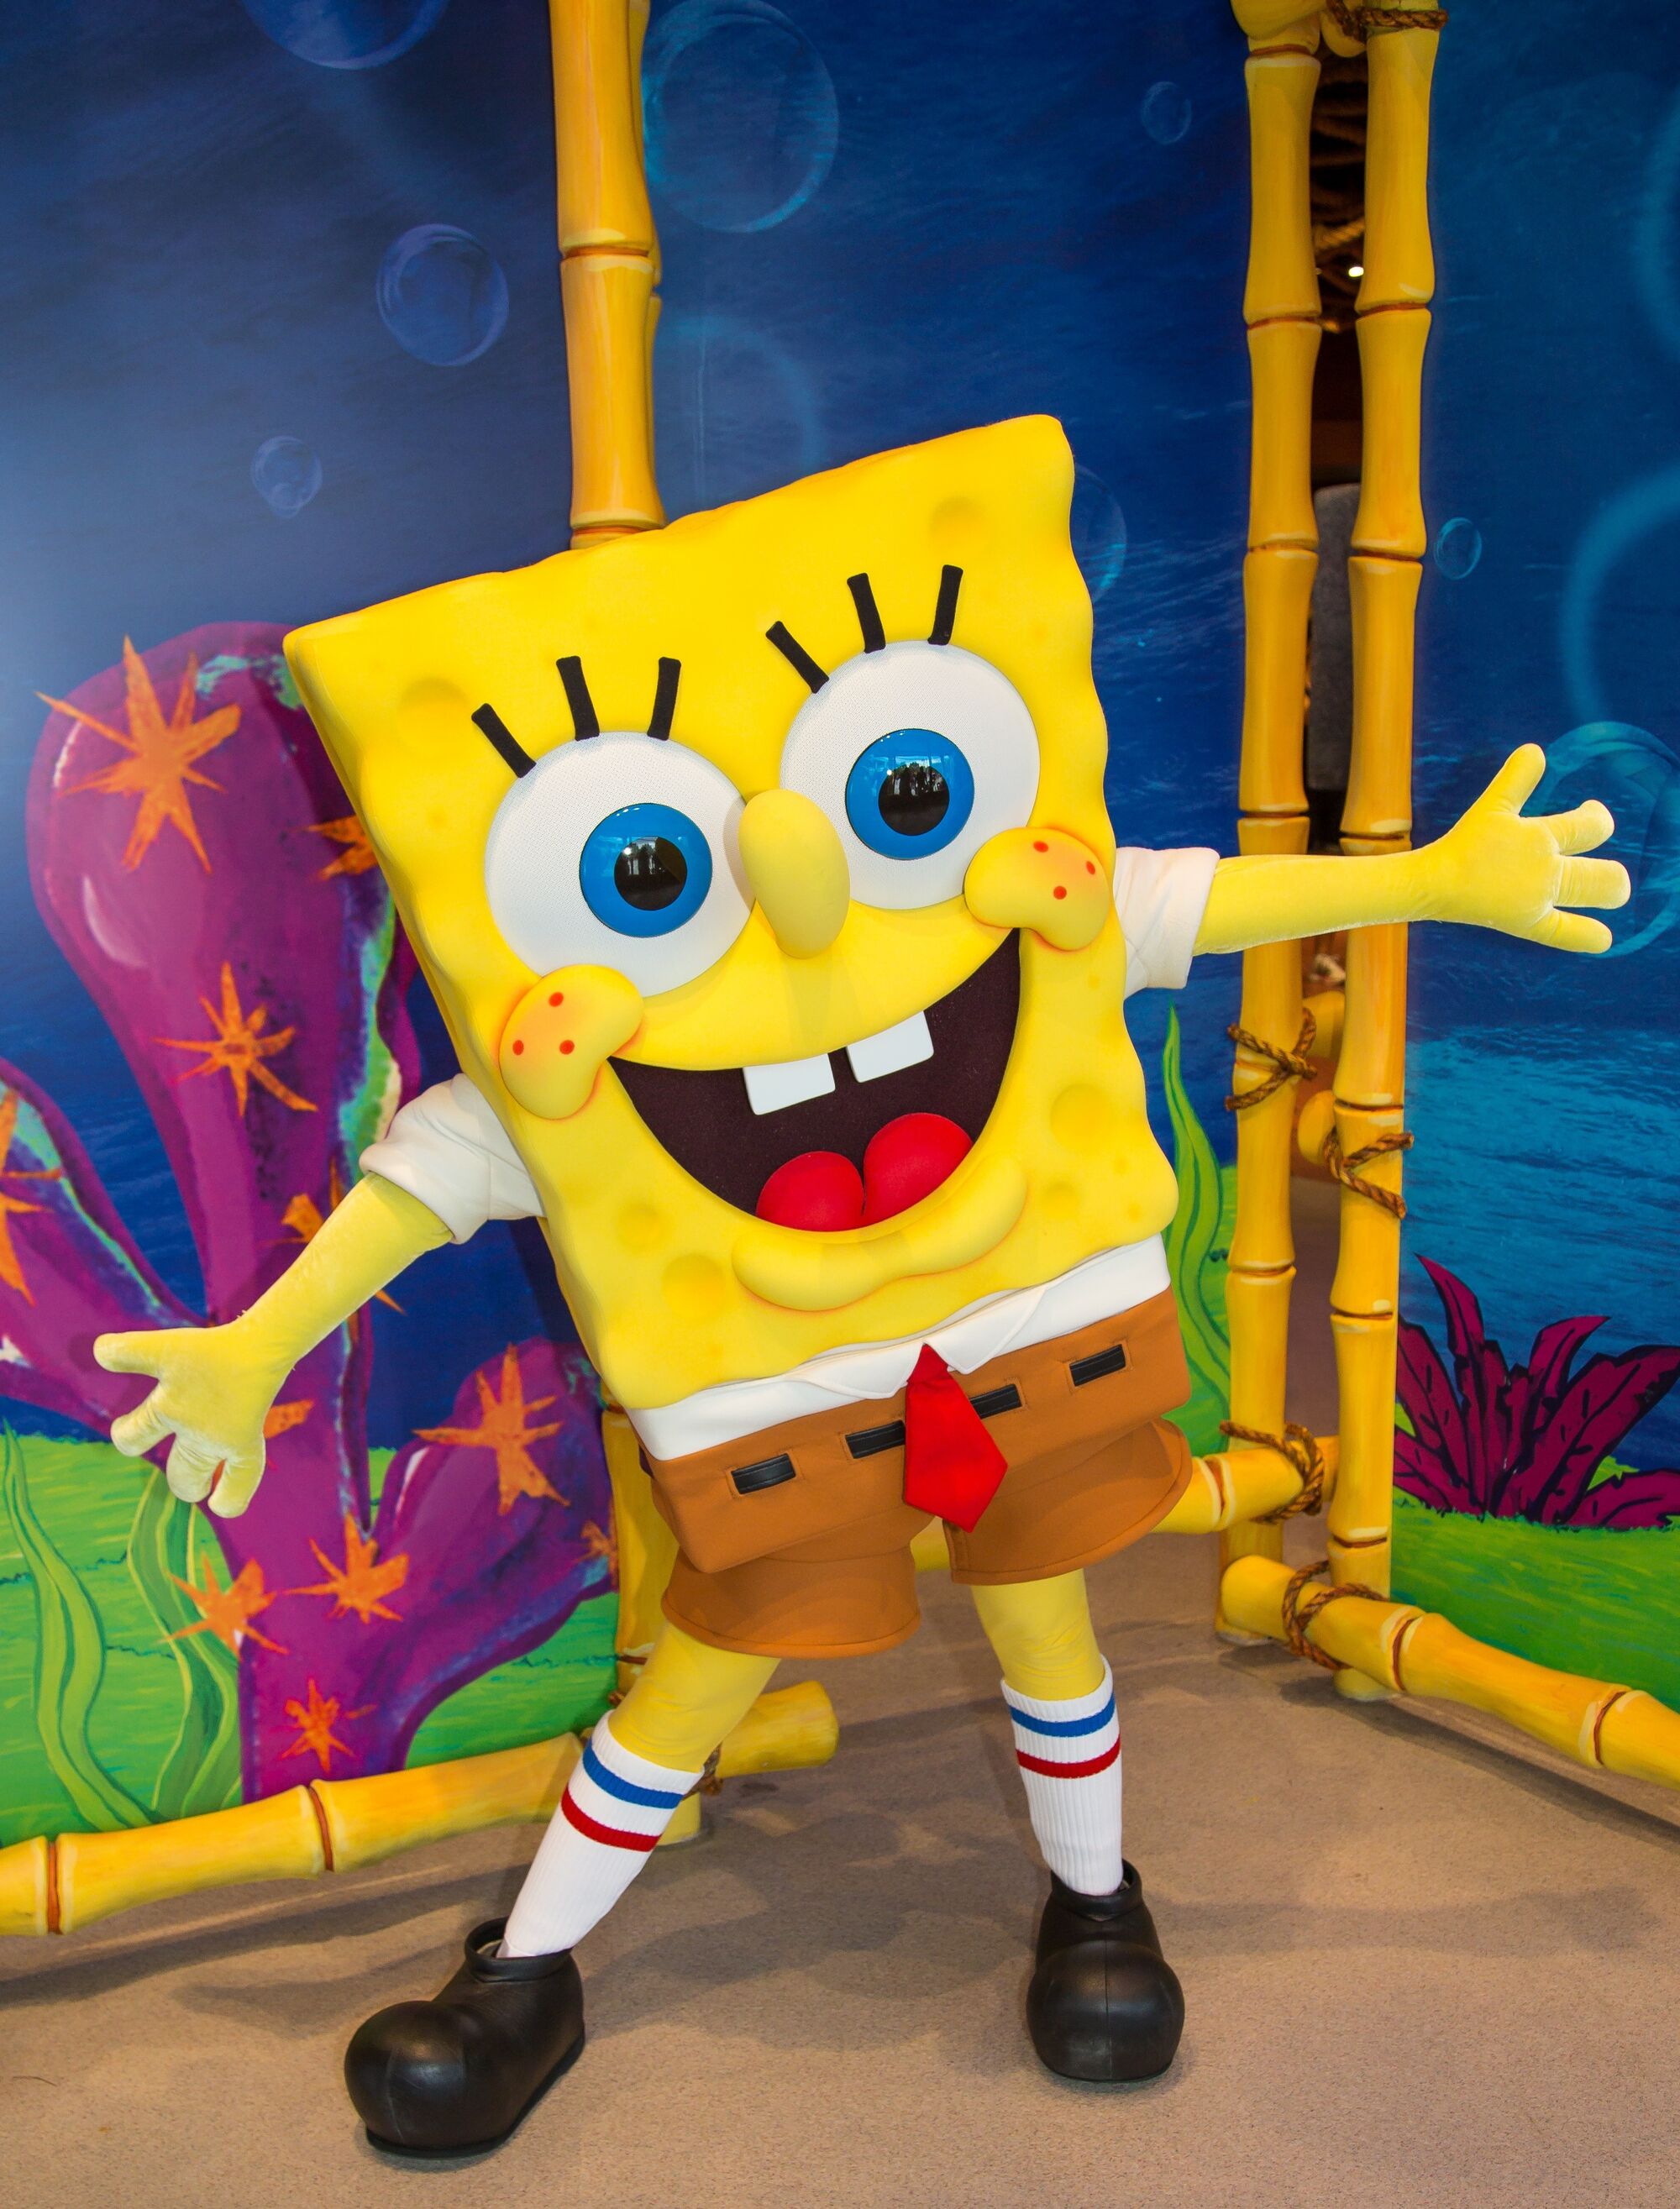 SpongeBob SquarePants (character) | Universal Orlando Wiki | Fandom